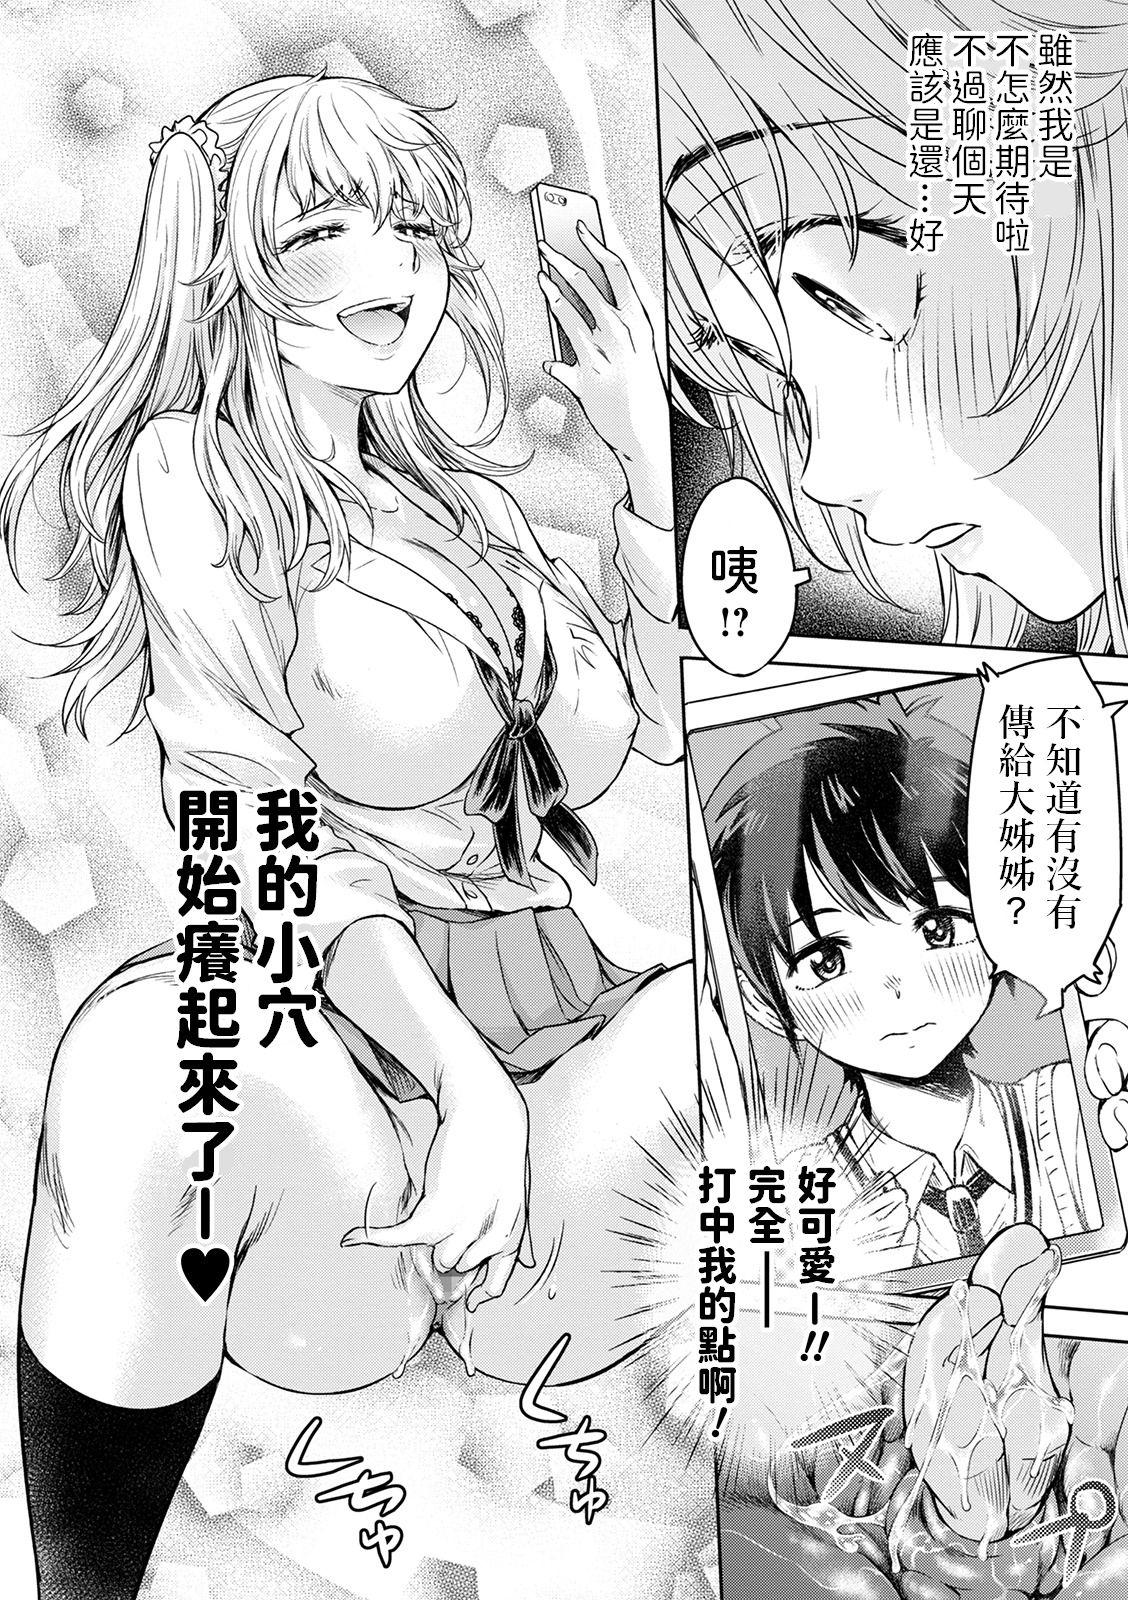 Peluda Osora ni wa Kirakira ga Ippai Parody - Page 6